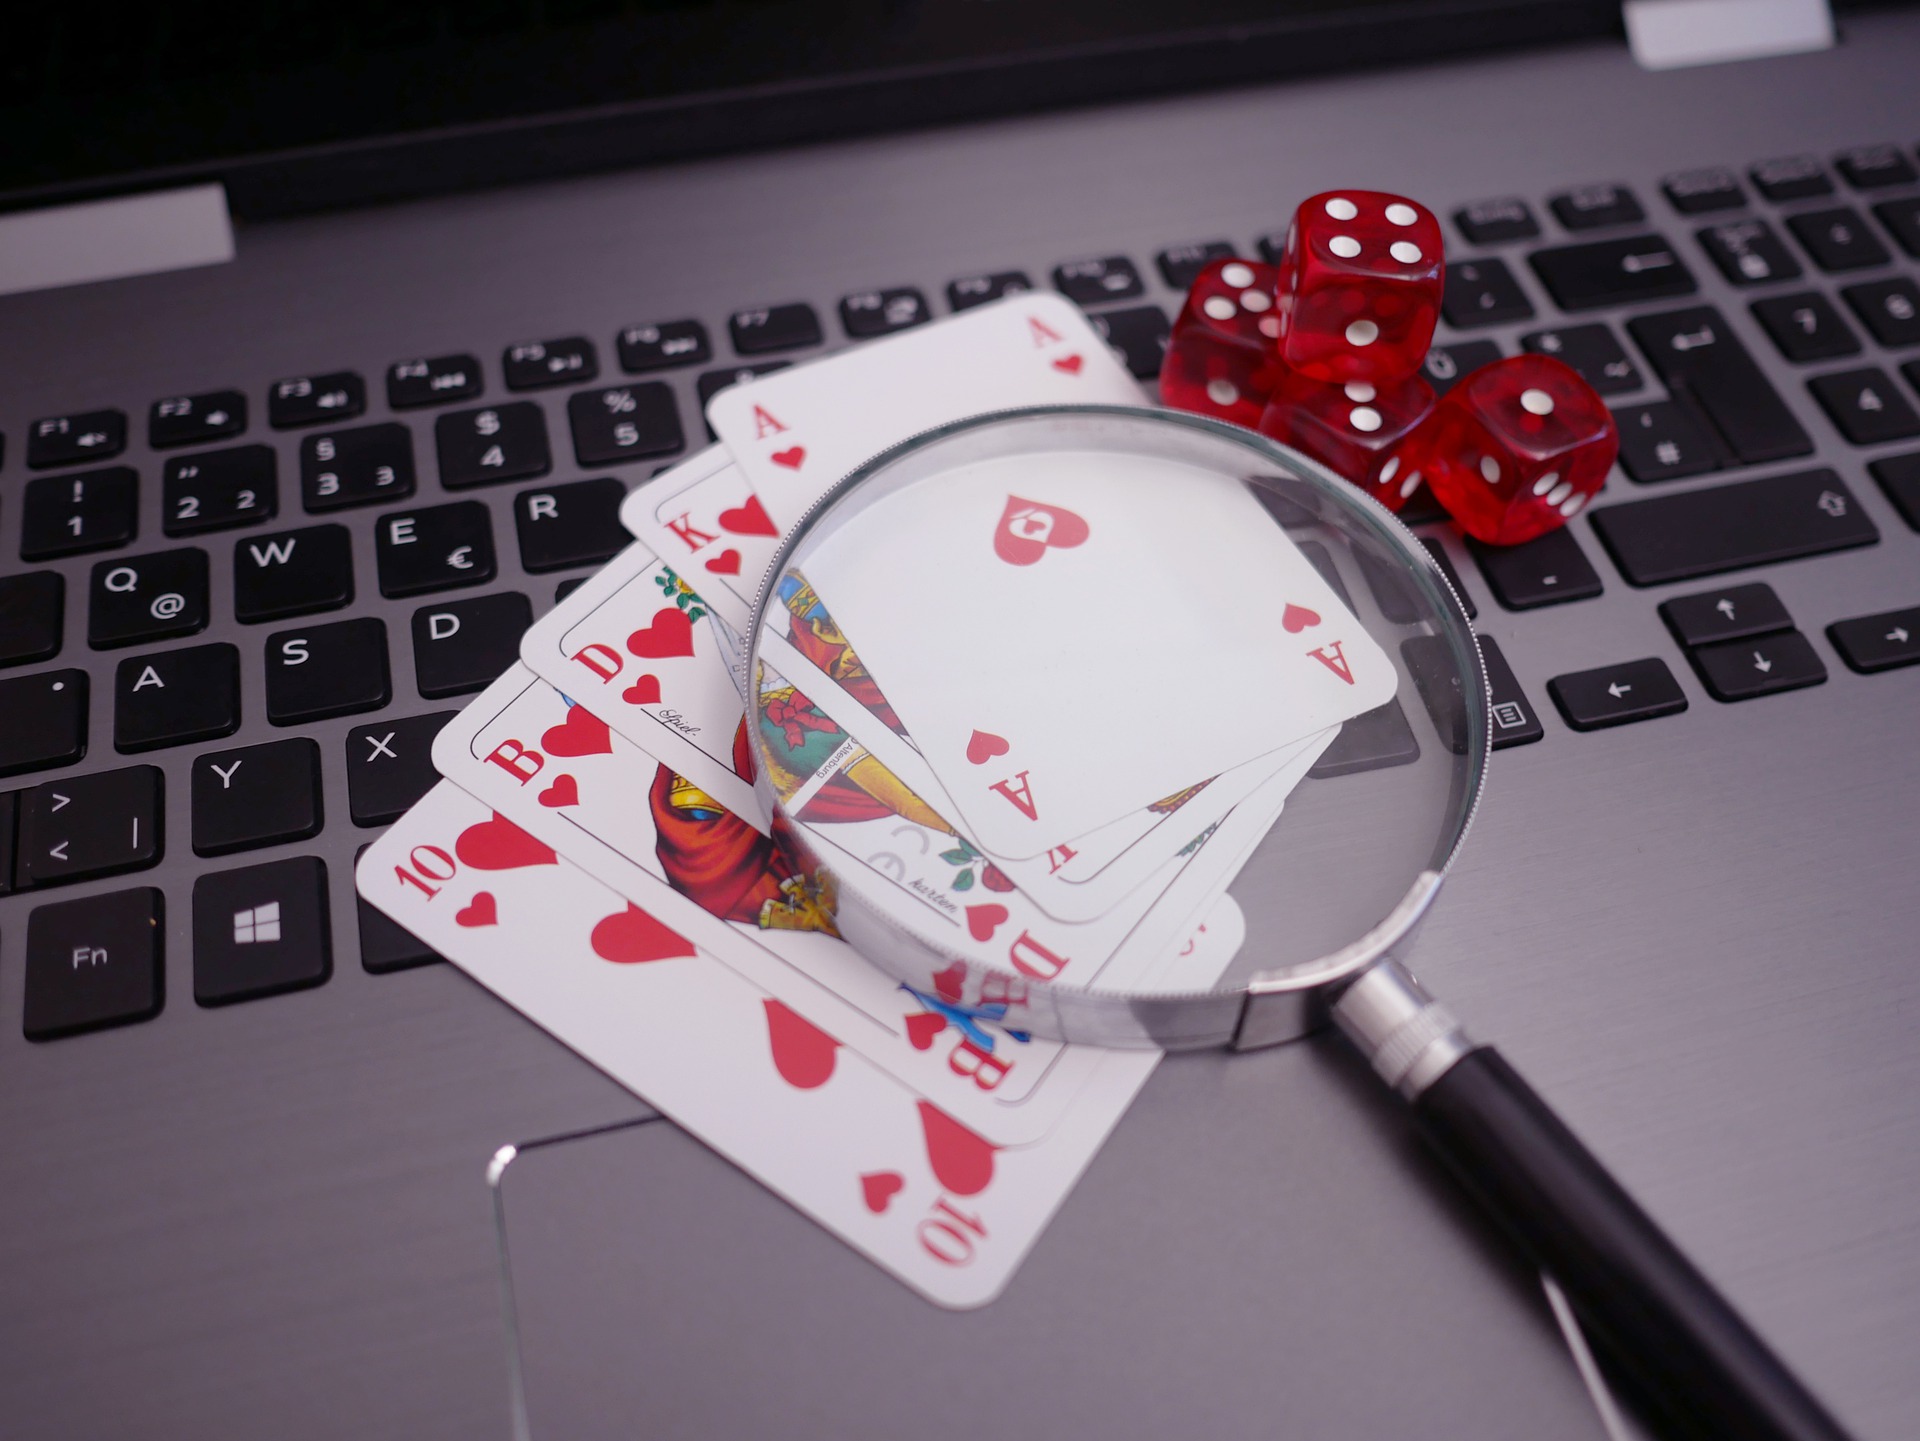 Source - https://pixabay.com/photos/poker-online-poker-casino-gambling-4518181/